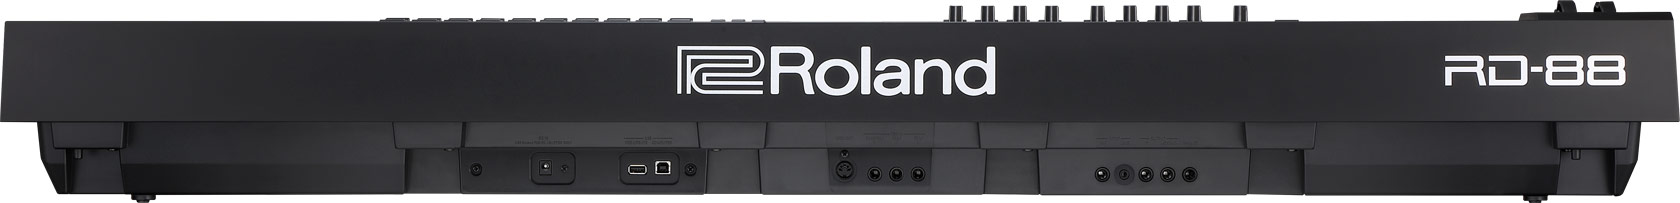 Roland RD-88 piano stage tastiera keyboard studio live strumenti musicali